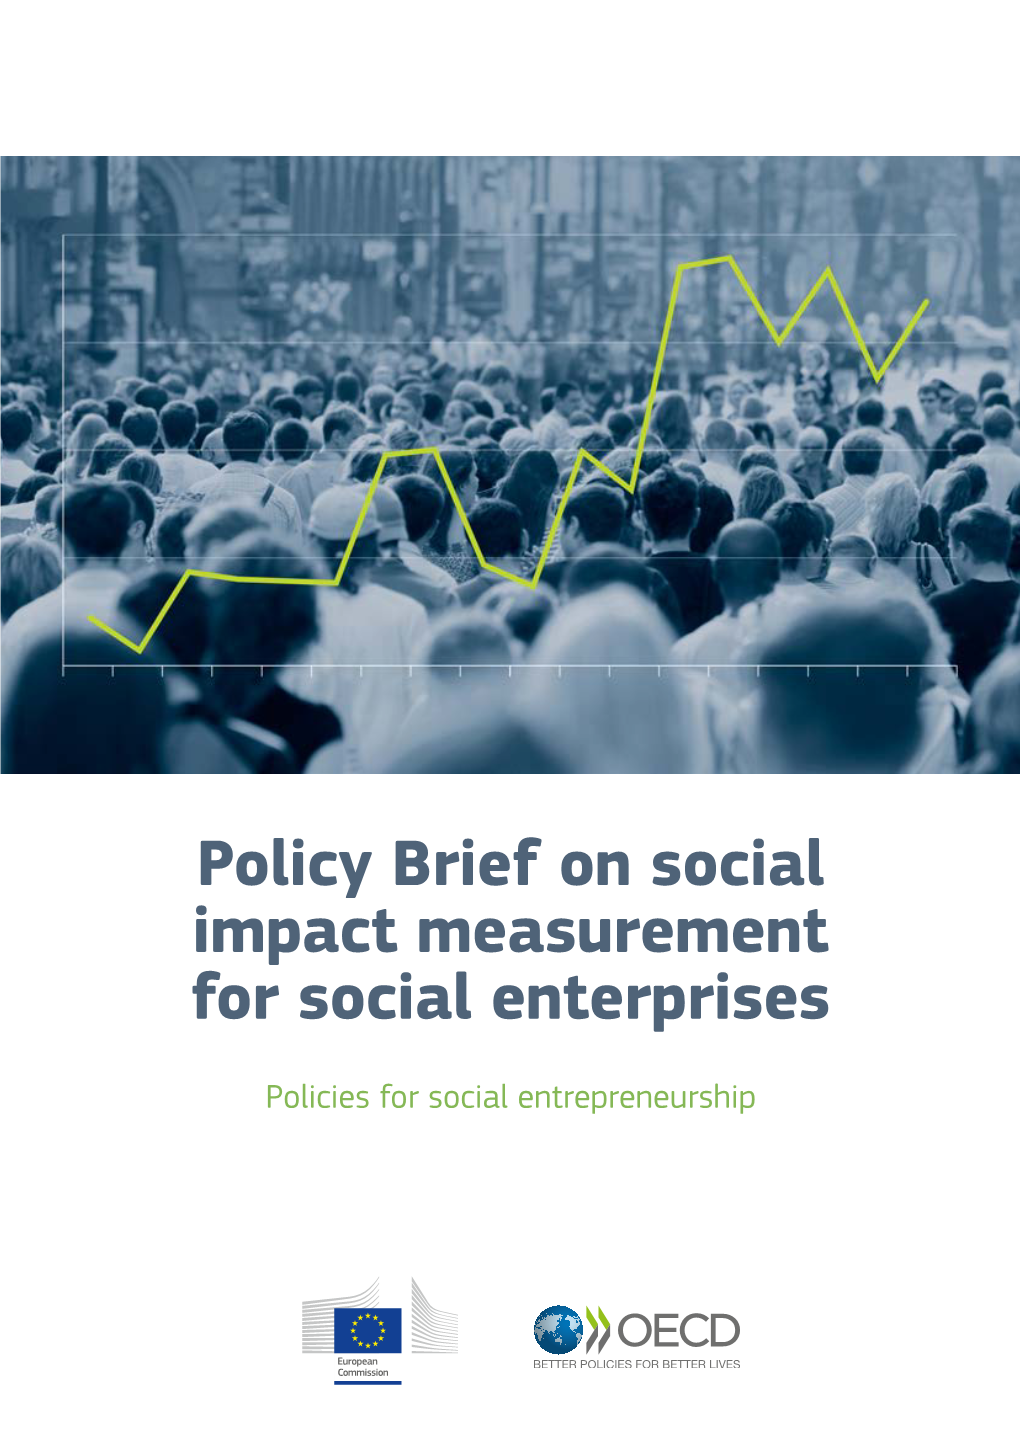 Policy Brief on Social Impact Measurement for Social Enterprises